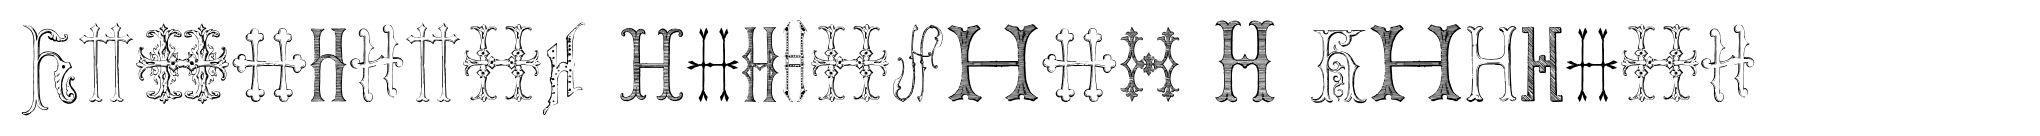 Victorian Alphabets H Regular image